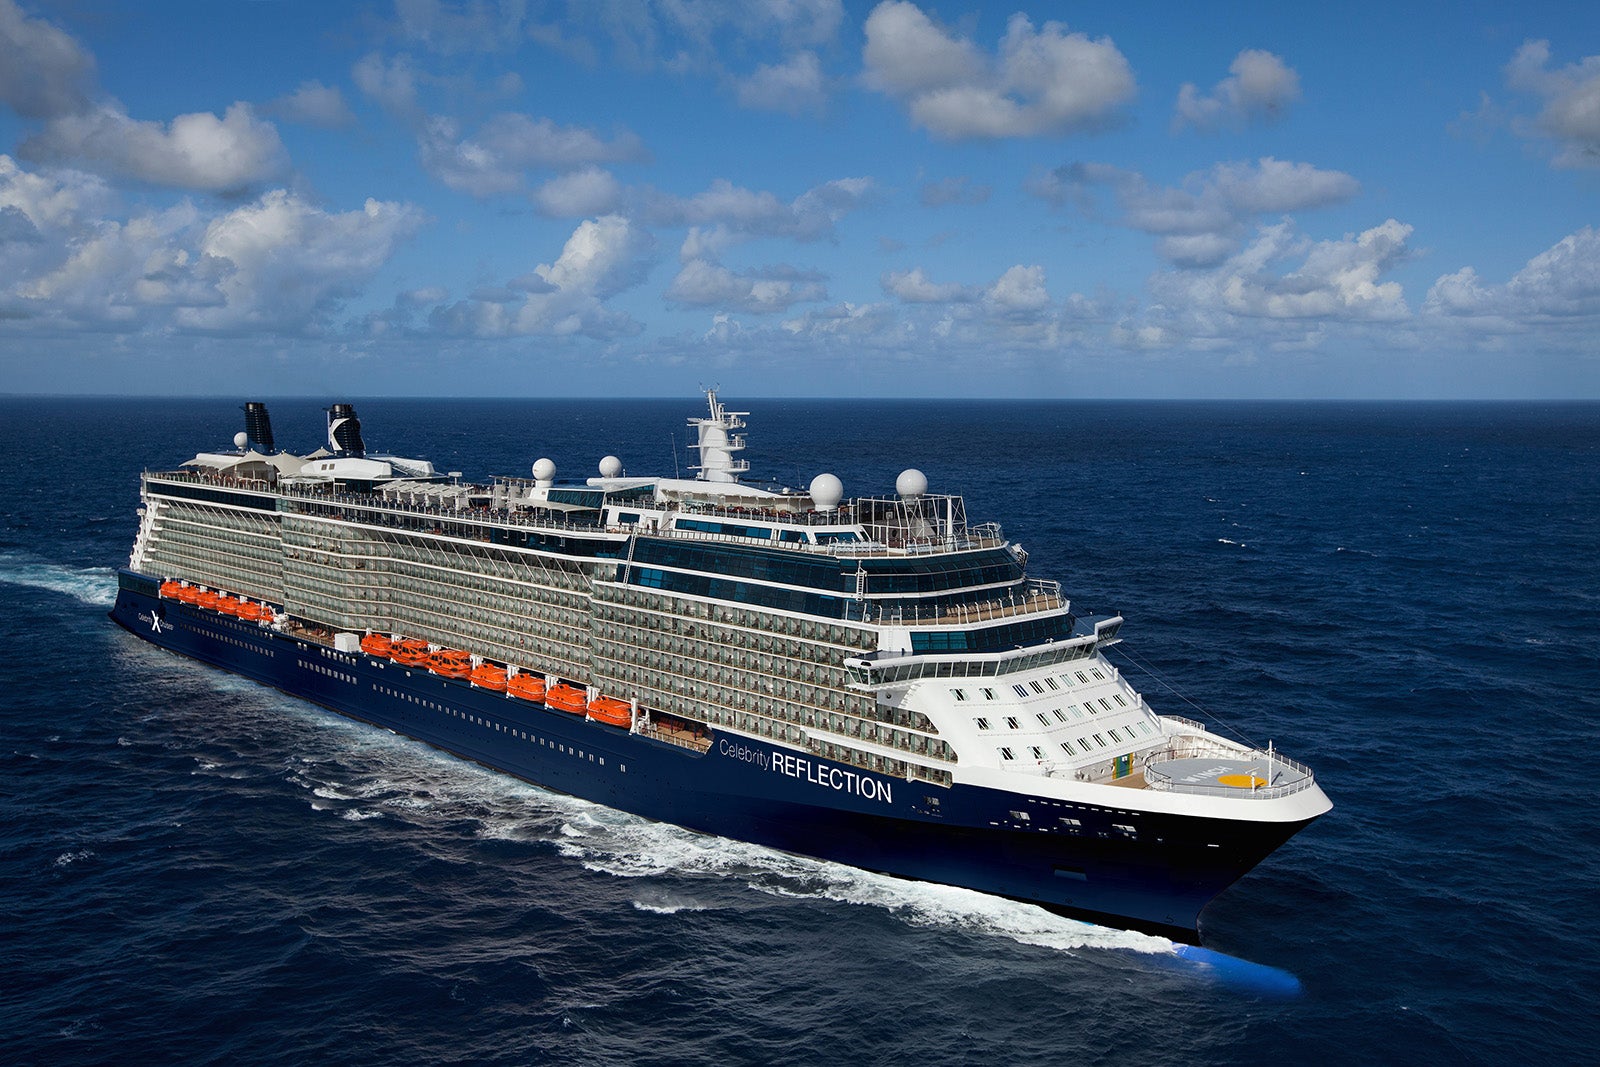 bahamas cruise price range